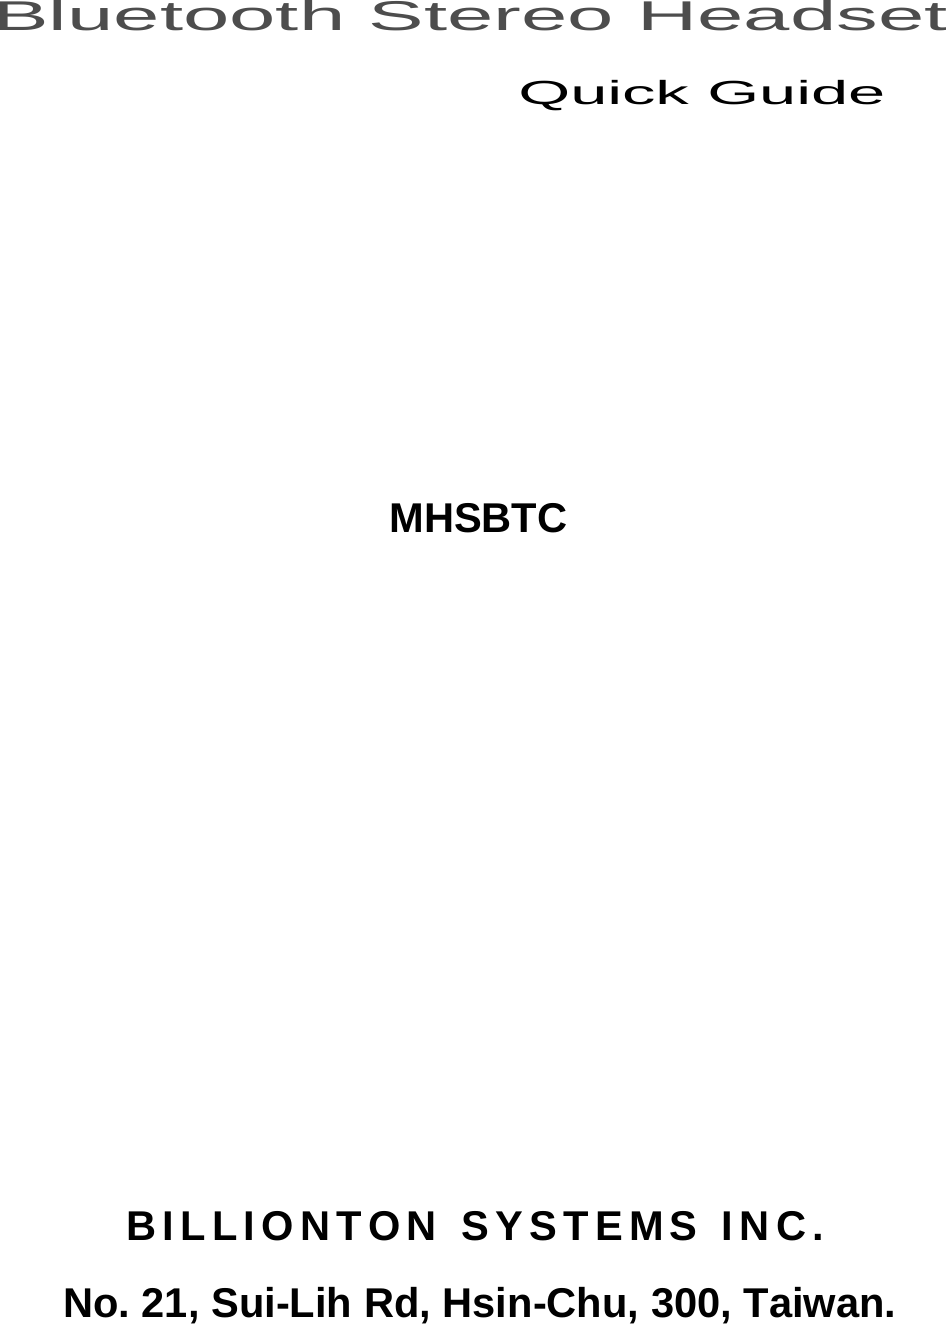               MHSBTC                 BILLIONTON SYSTEMS INC. No. 21, Sui-Lih Rd, Hsin-Chu, 300, Taiwan.Bluetooth Stereo HeadsetQuick Guide 